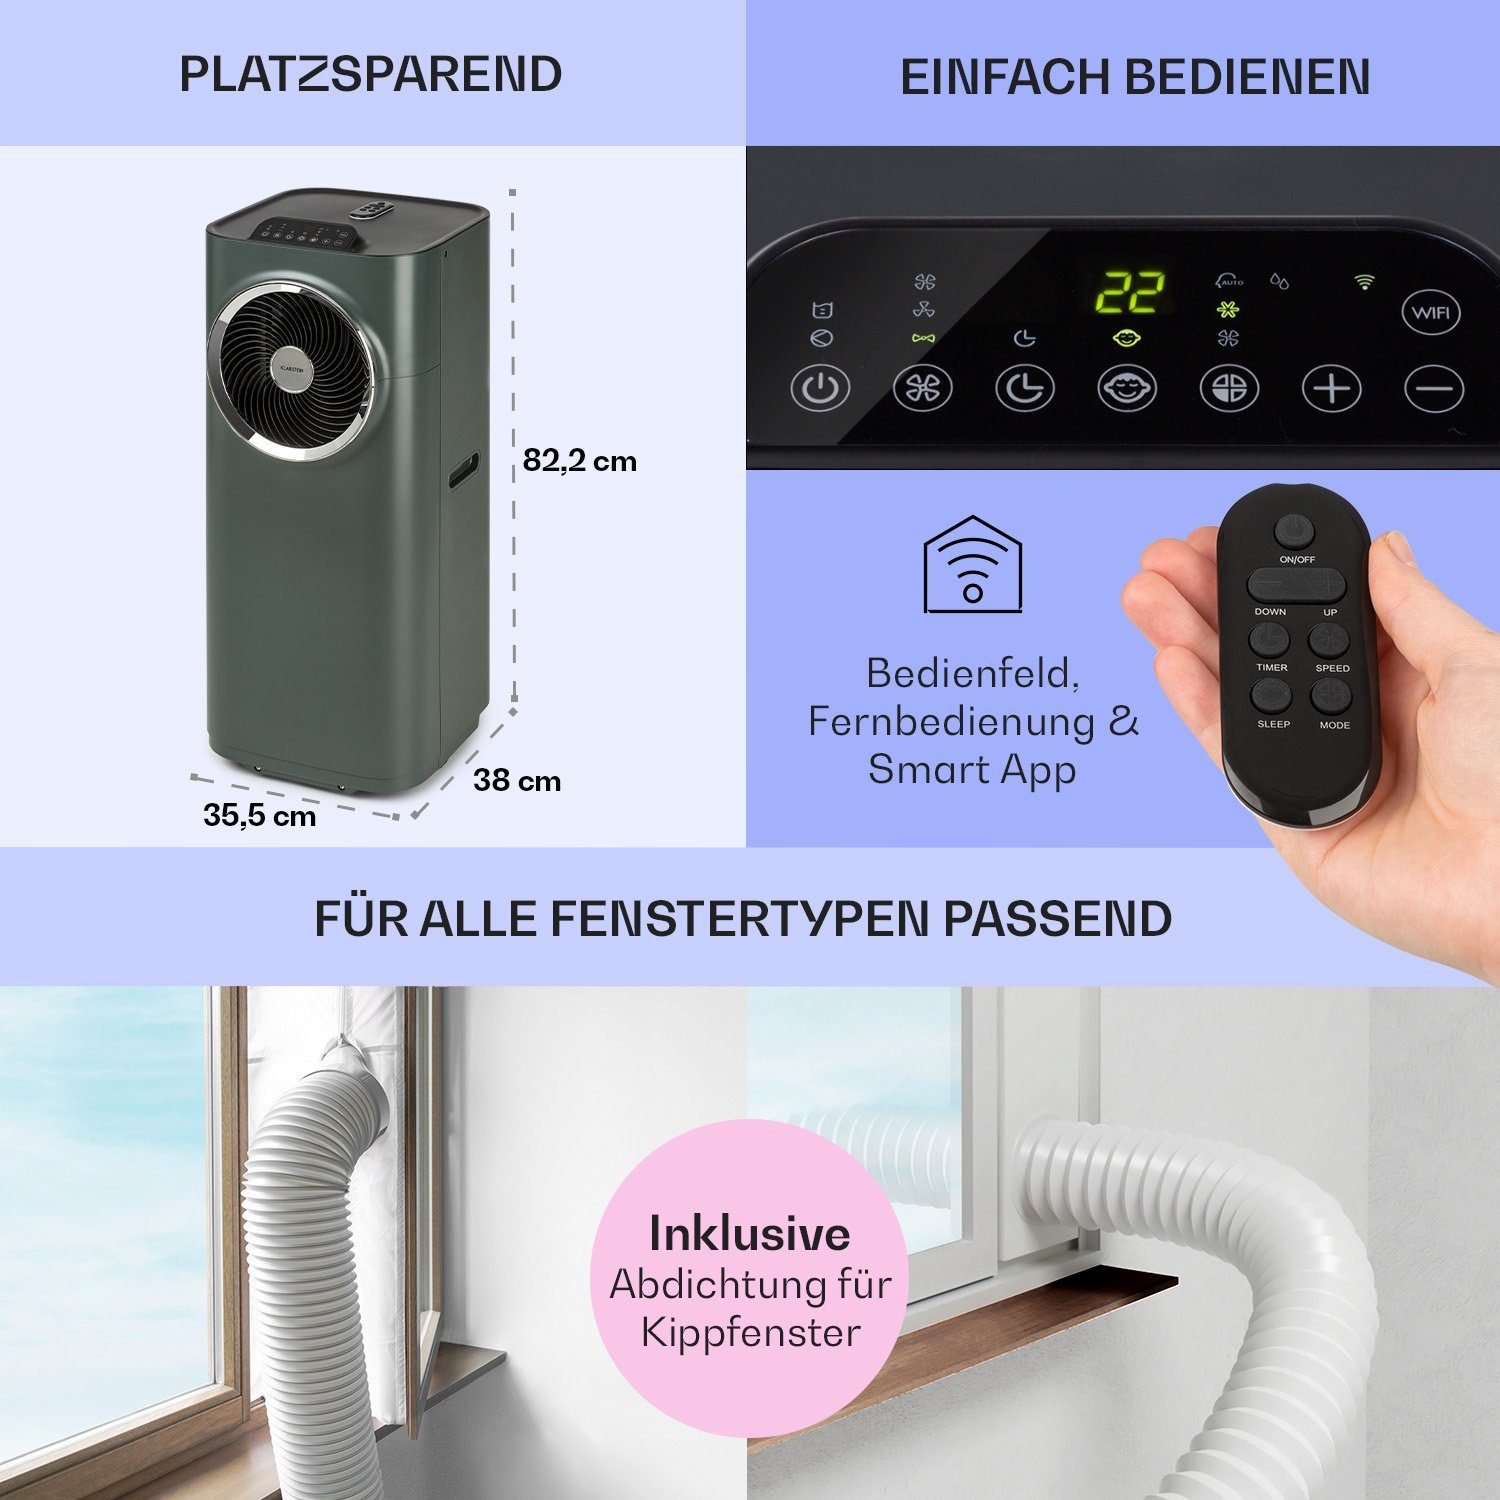 Kraftwerk Klarstein mobil Conditioner Smart, Kühlgerät Klimagerät Klimagerät Air Luftkühler